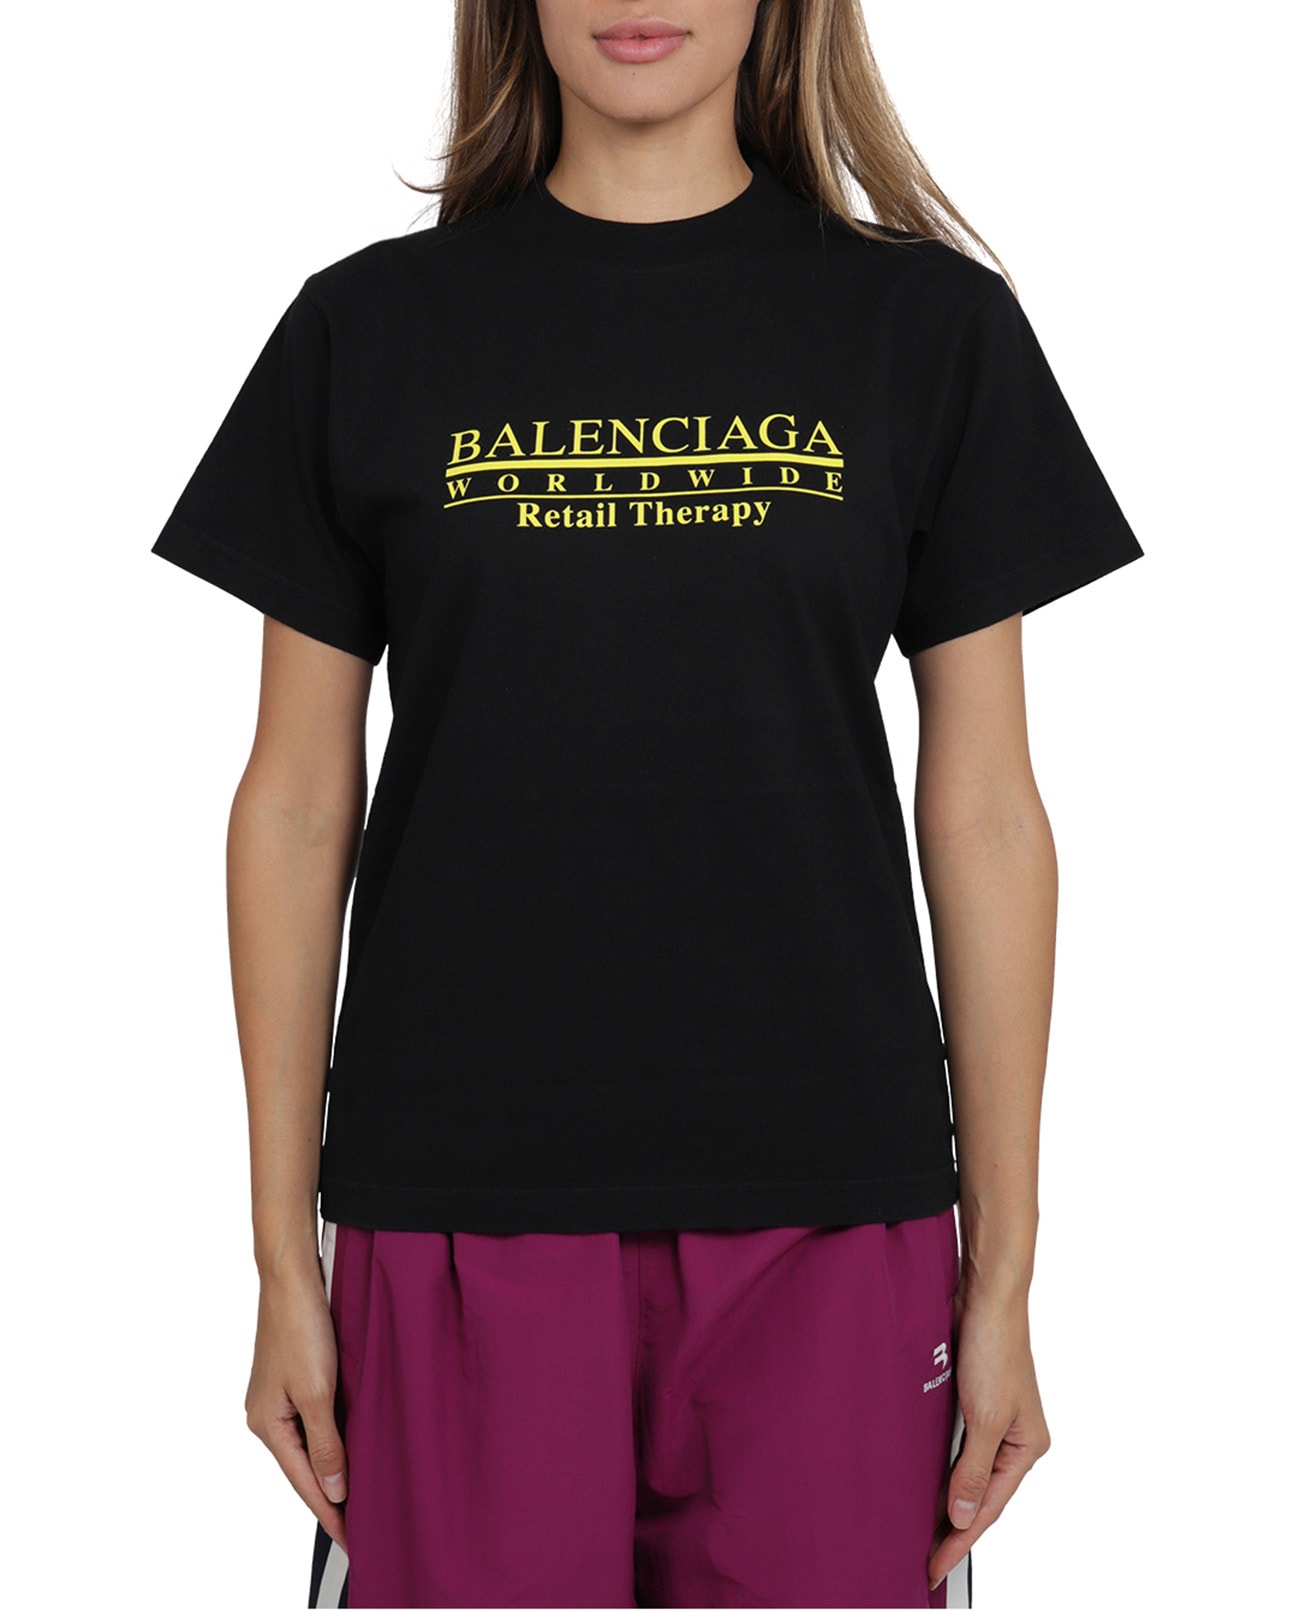 Balenciaga Black Retail Therapy T-shirt